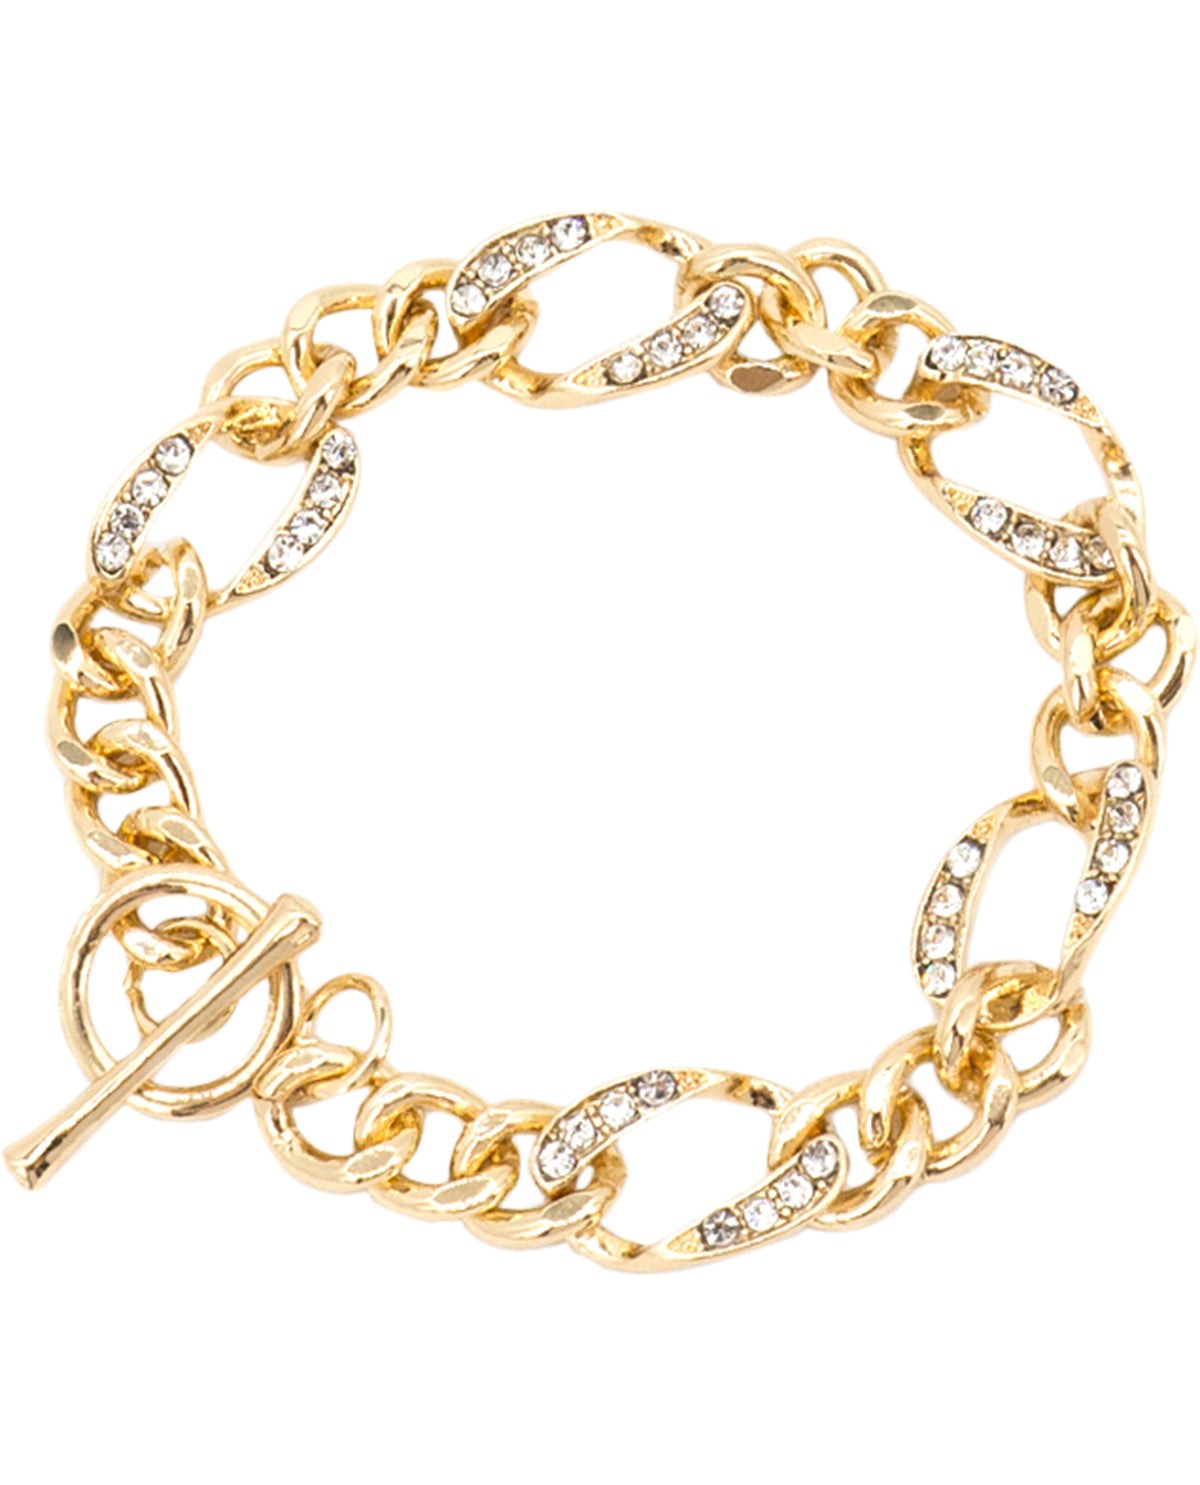 Linked Chain With Rhinestones Toggle Bracelet